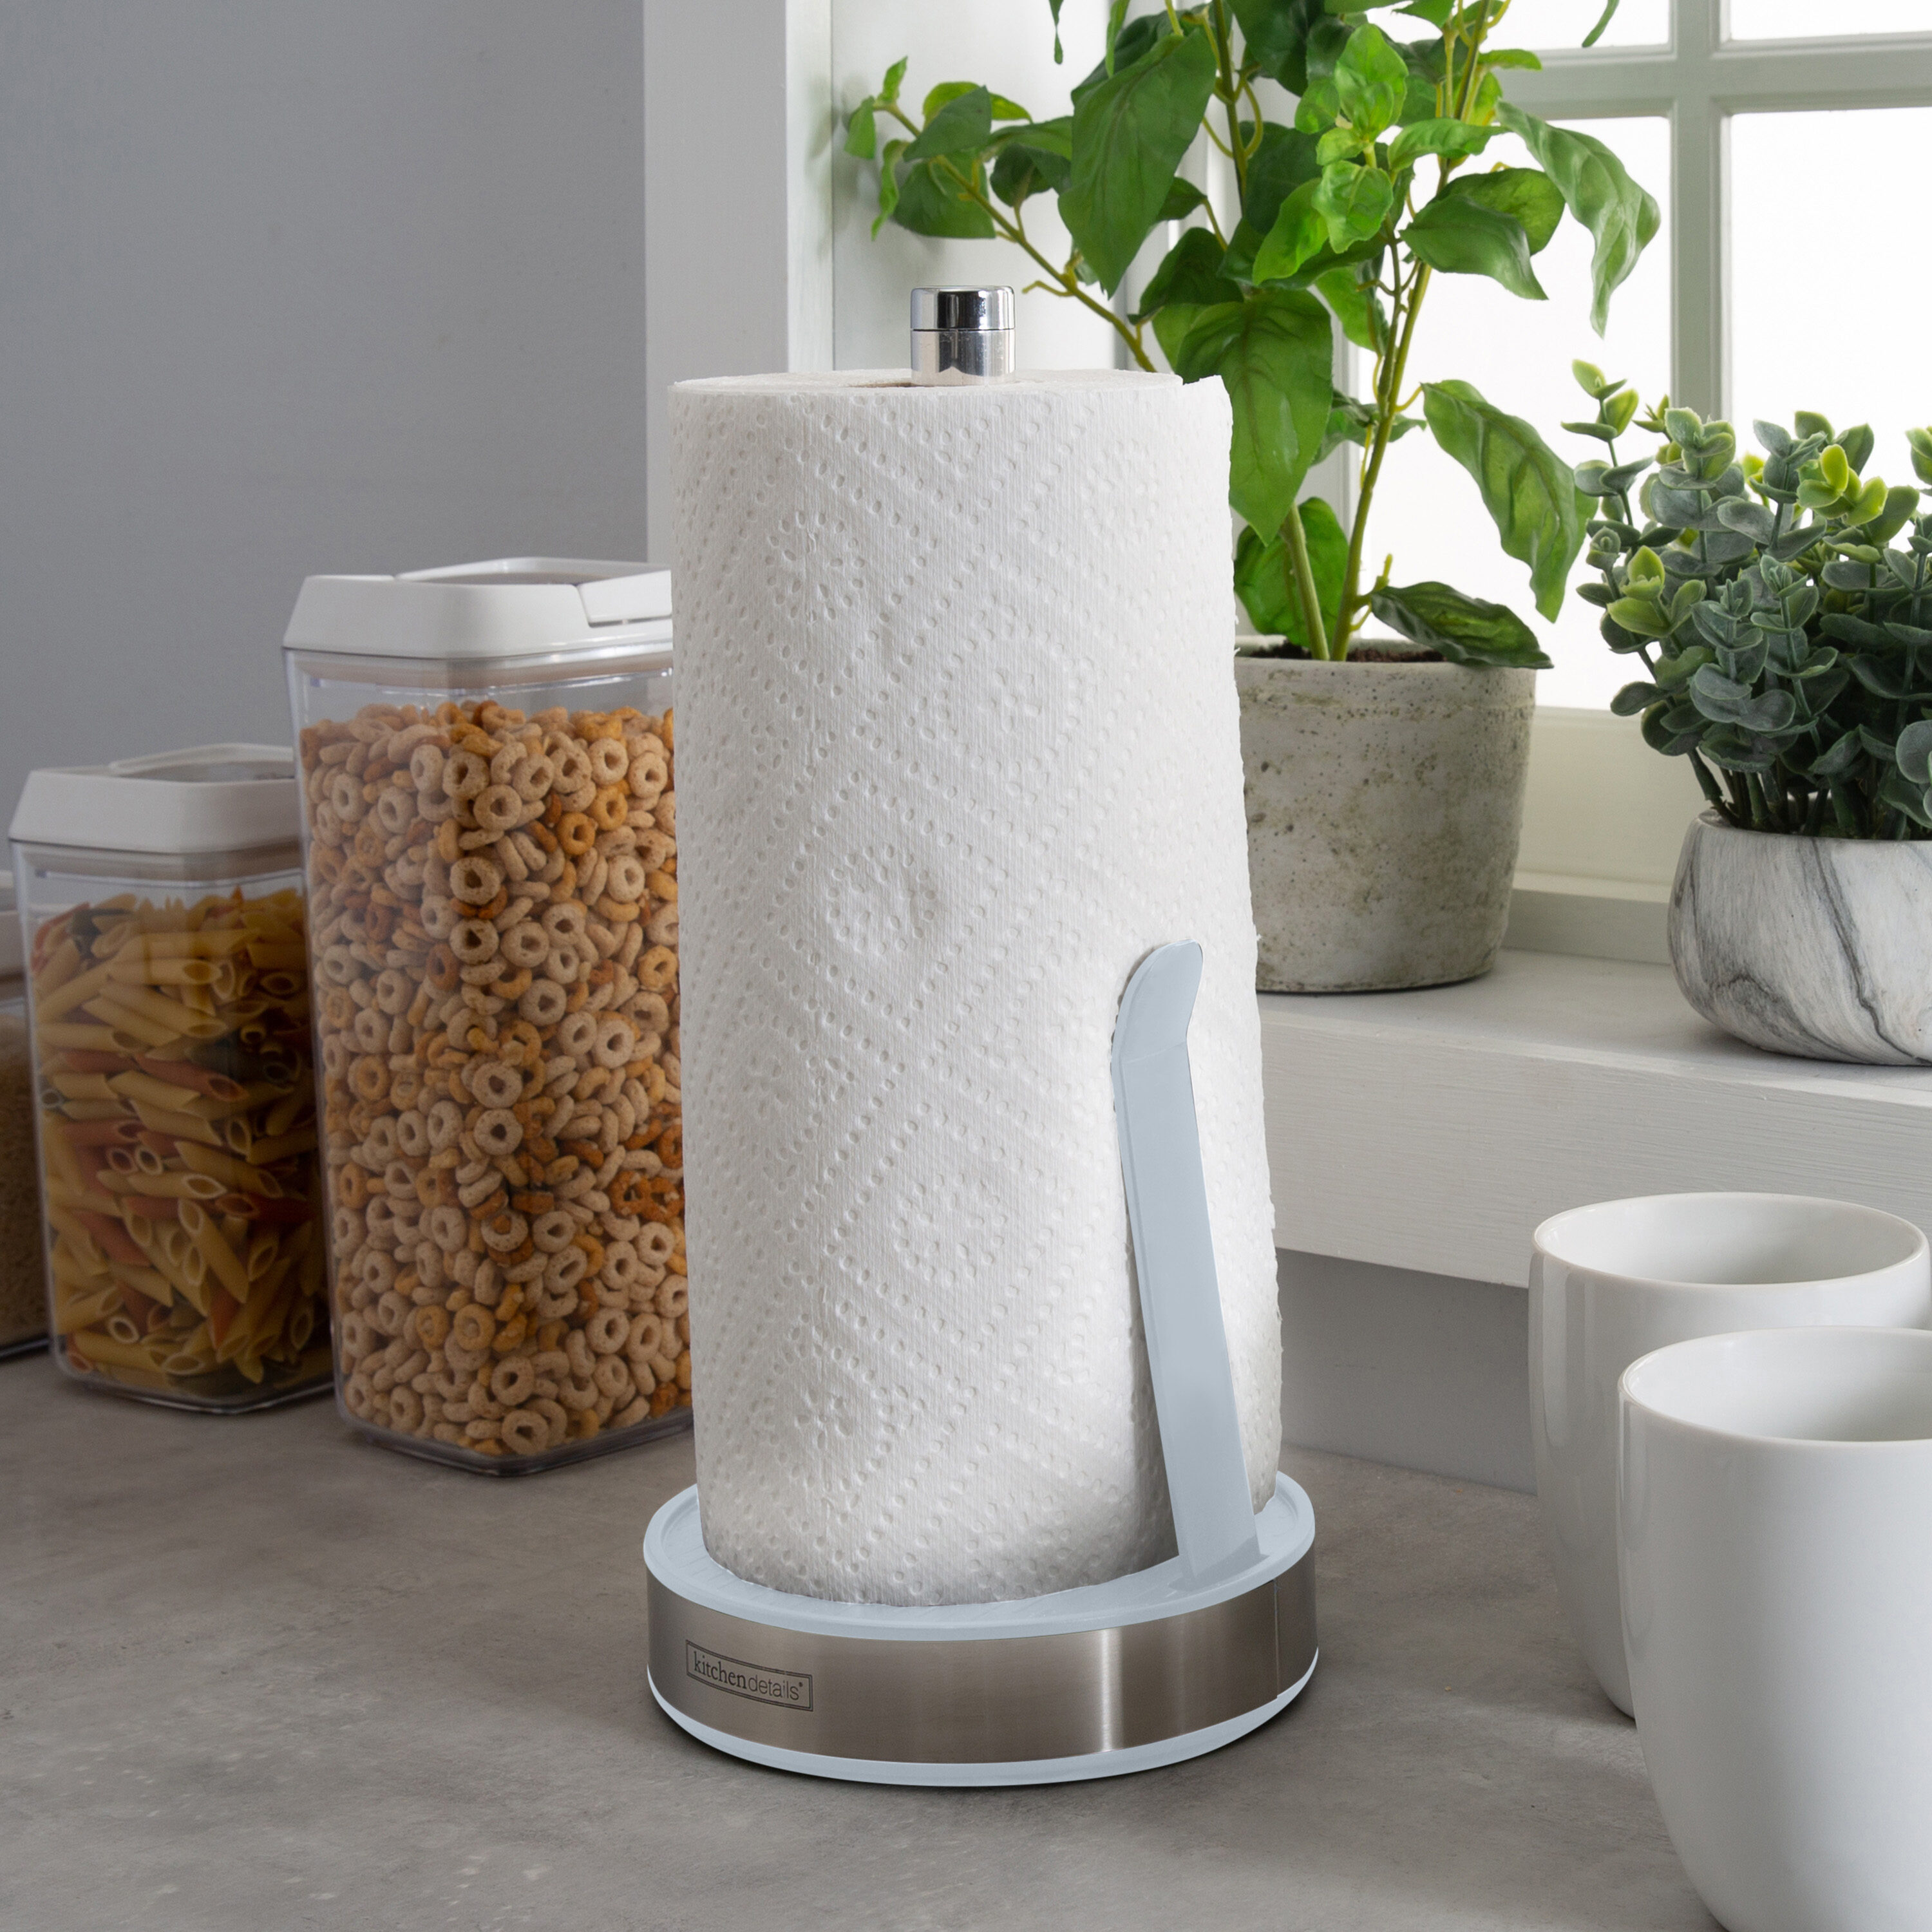 Kitchen Details Paper Towel Holder in White - Freestanding Metal